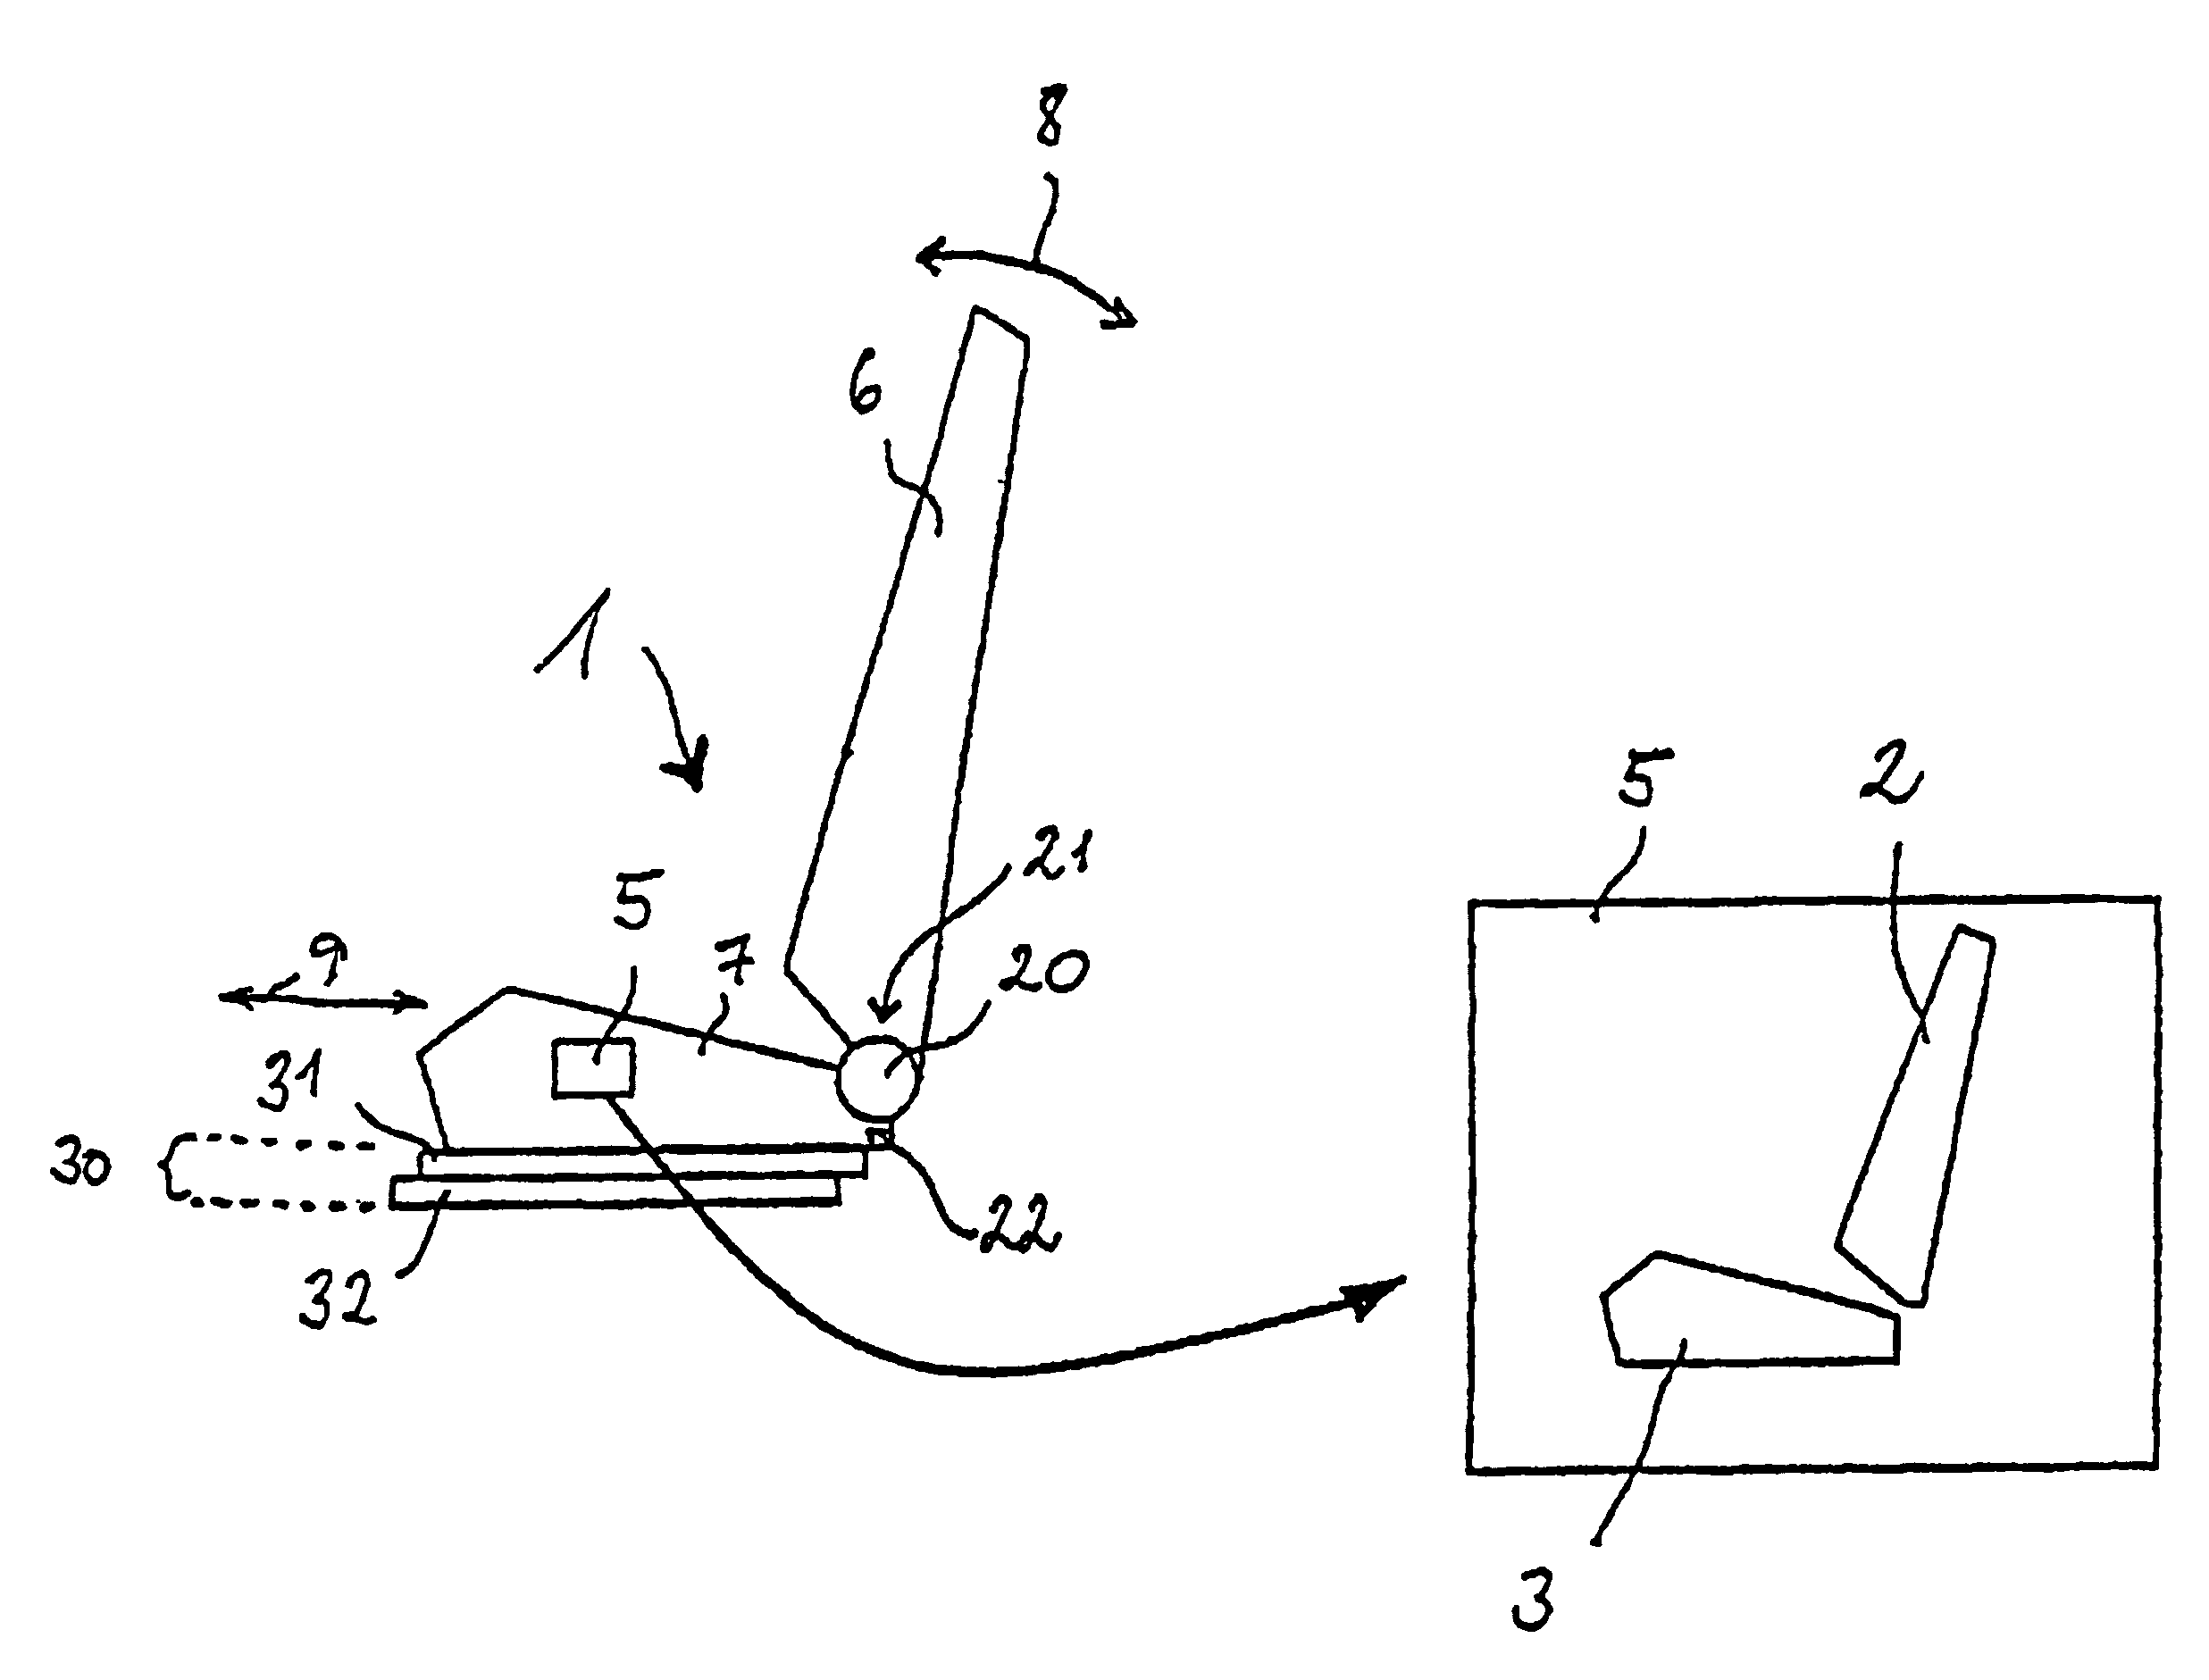 Vehicle seat adjusting mechanism